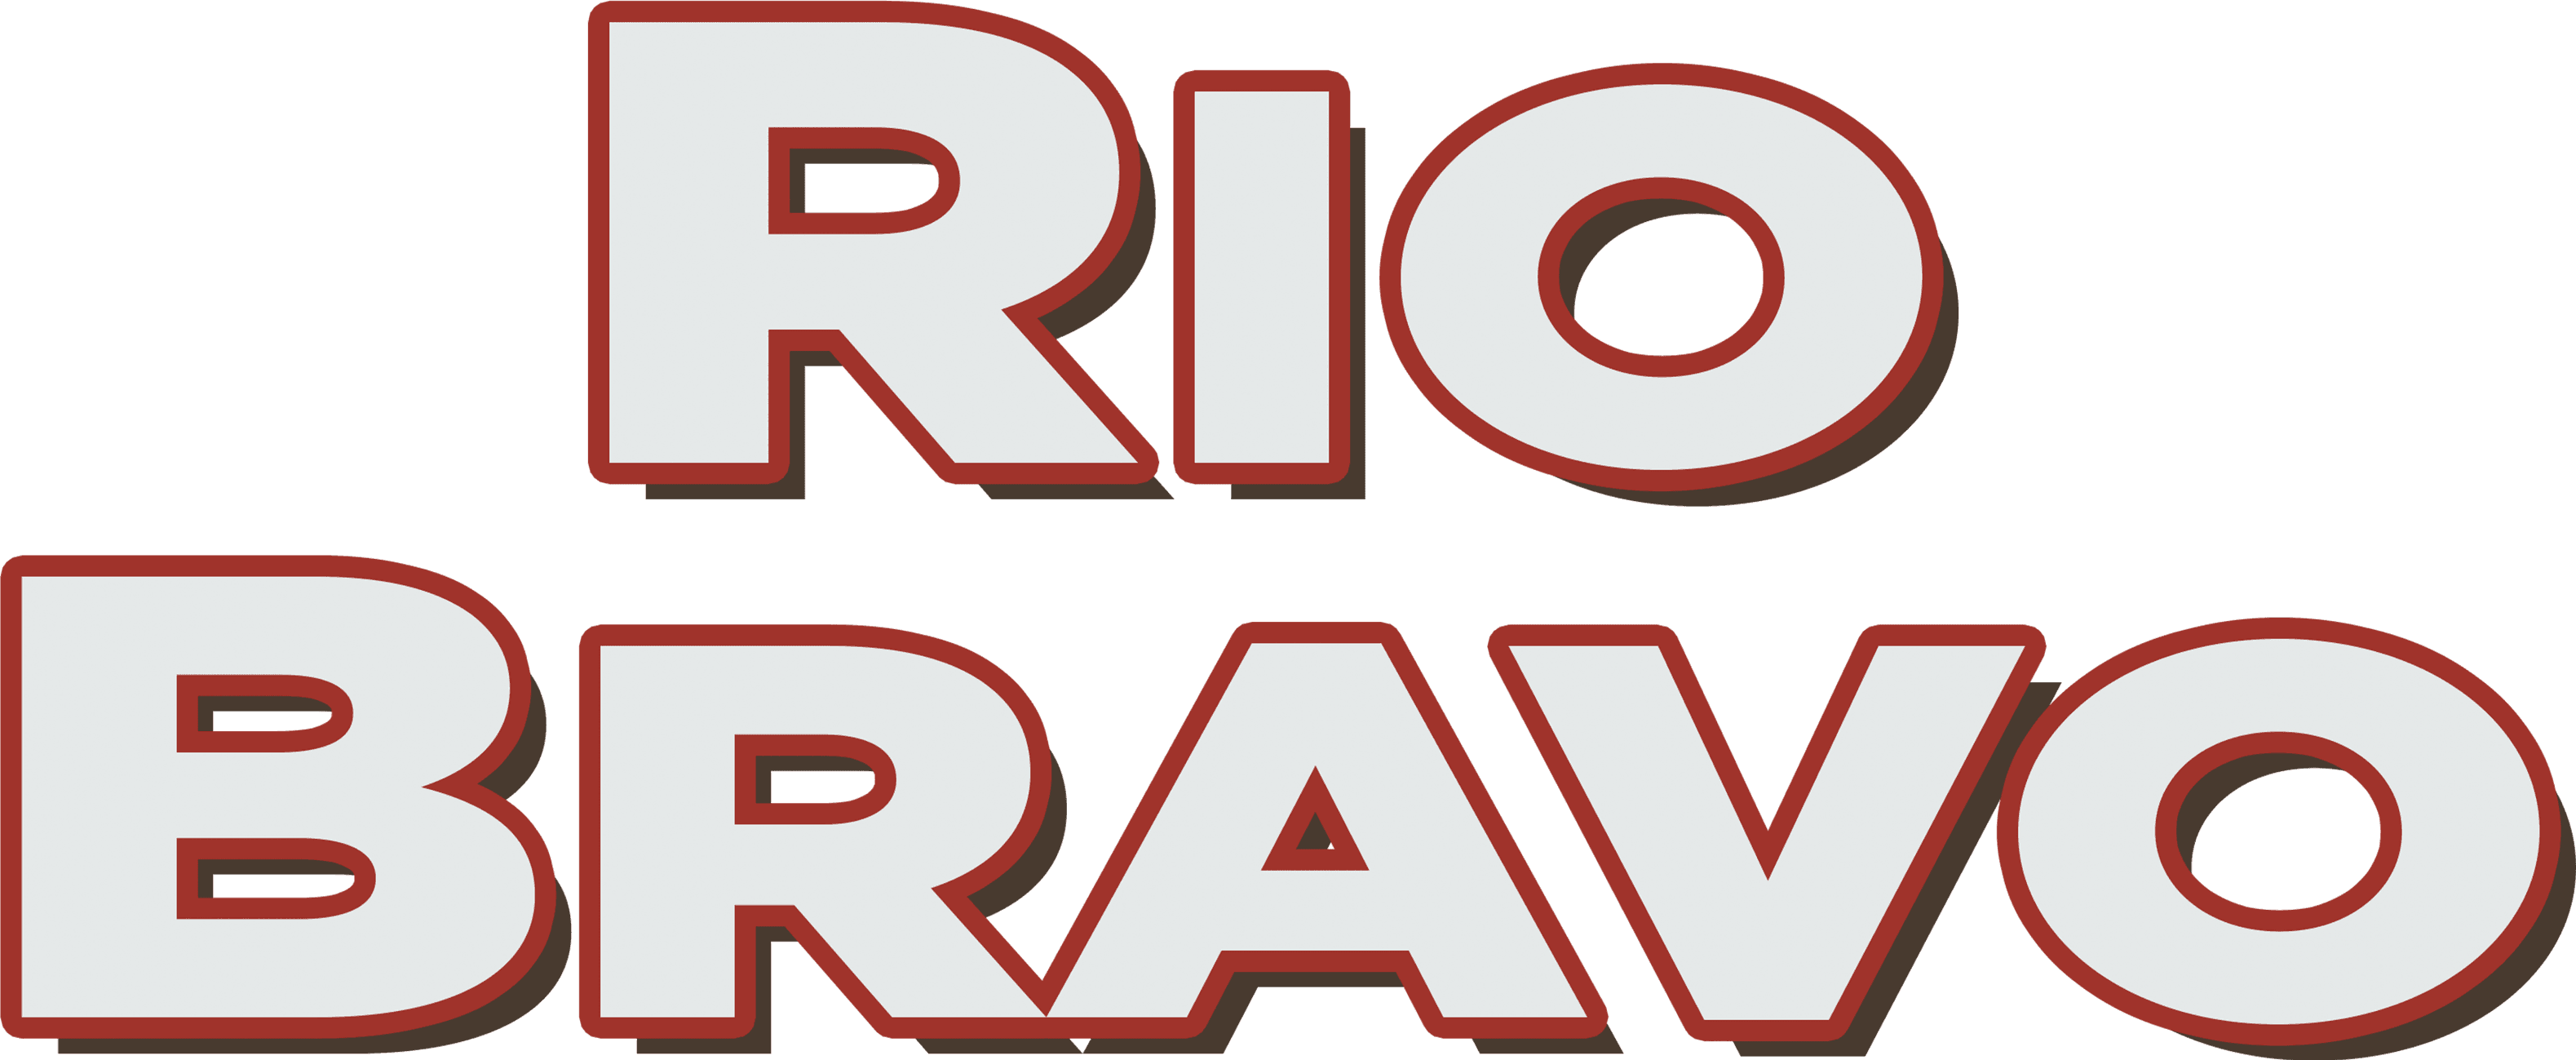 Rio Bravo logo